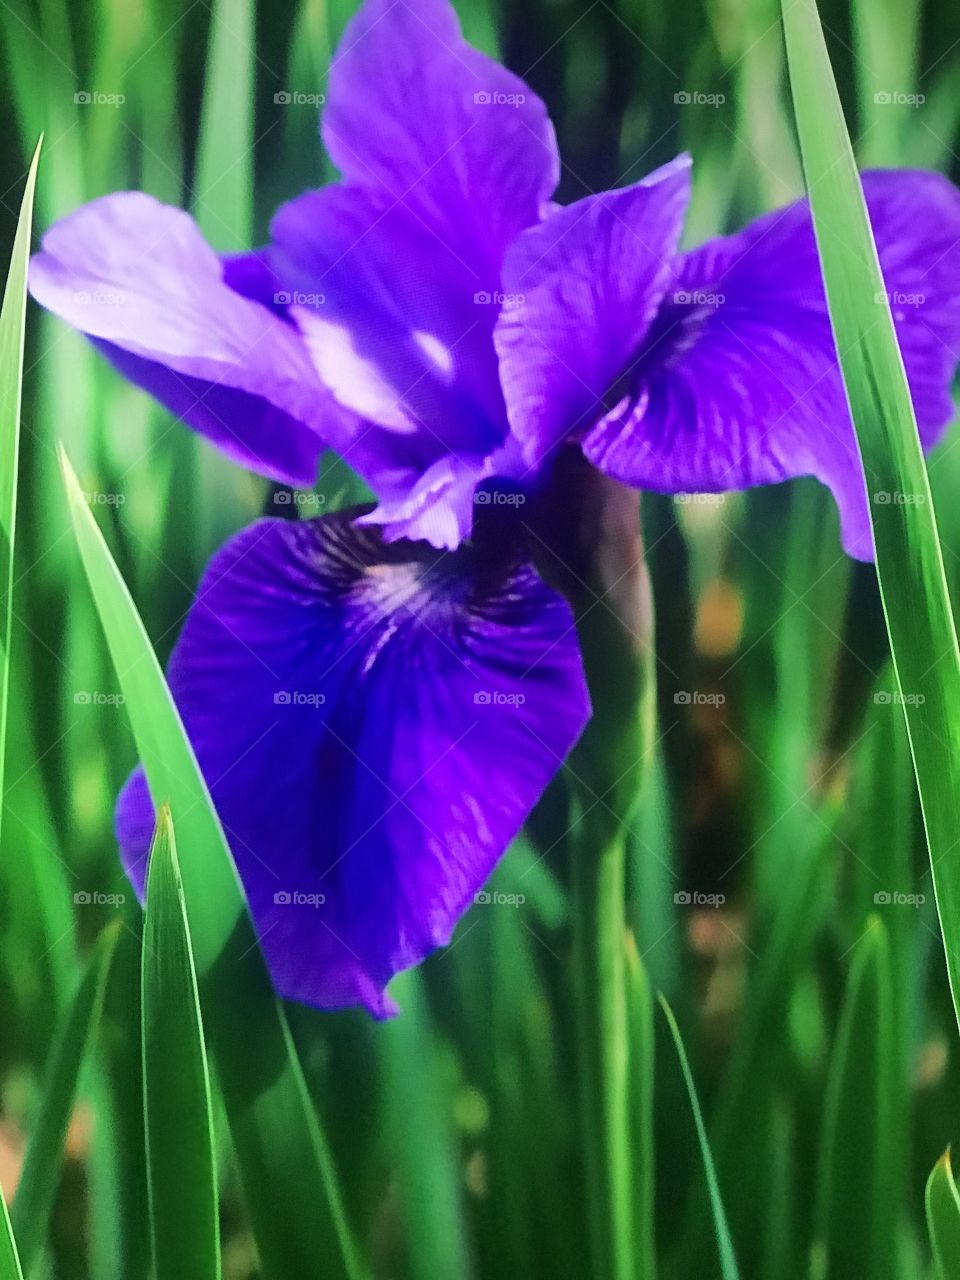 Tulip purple lilies 